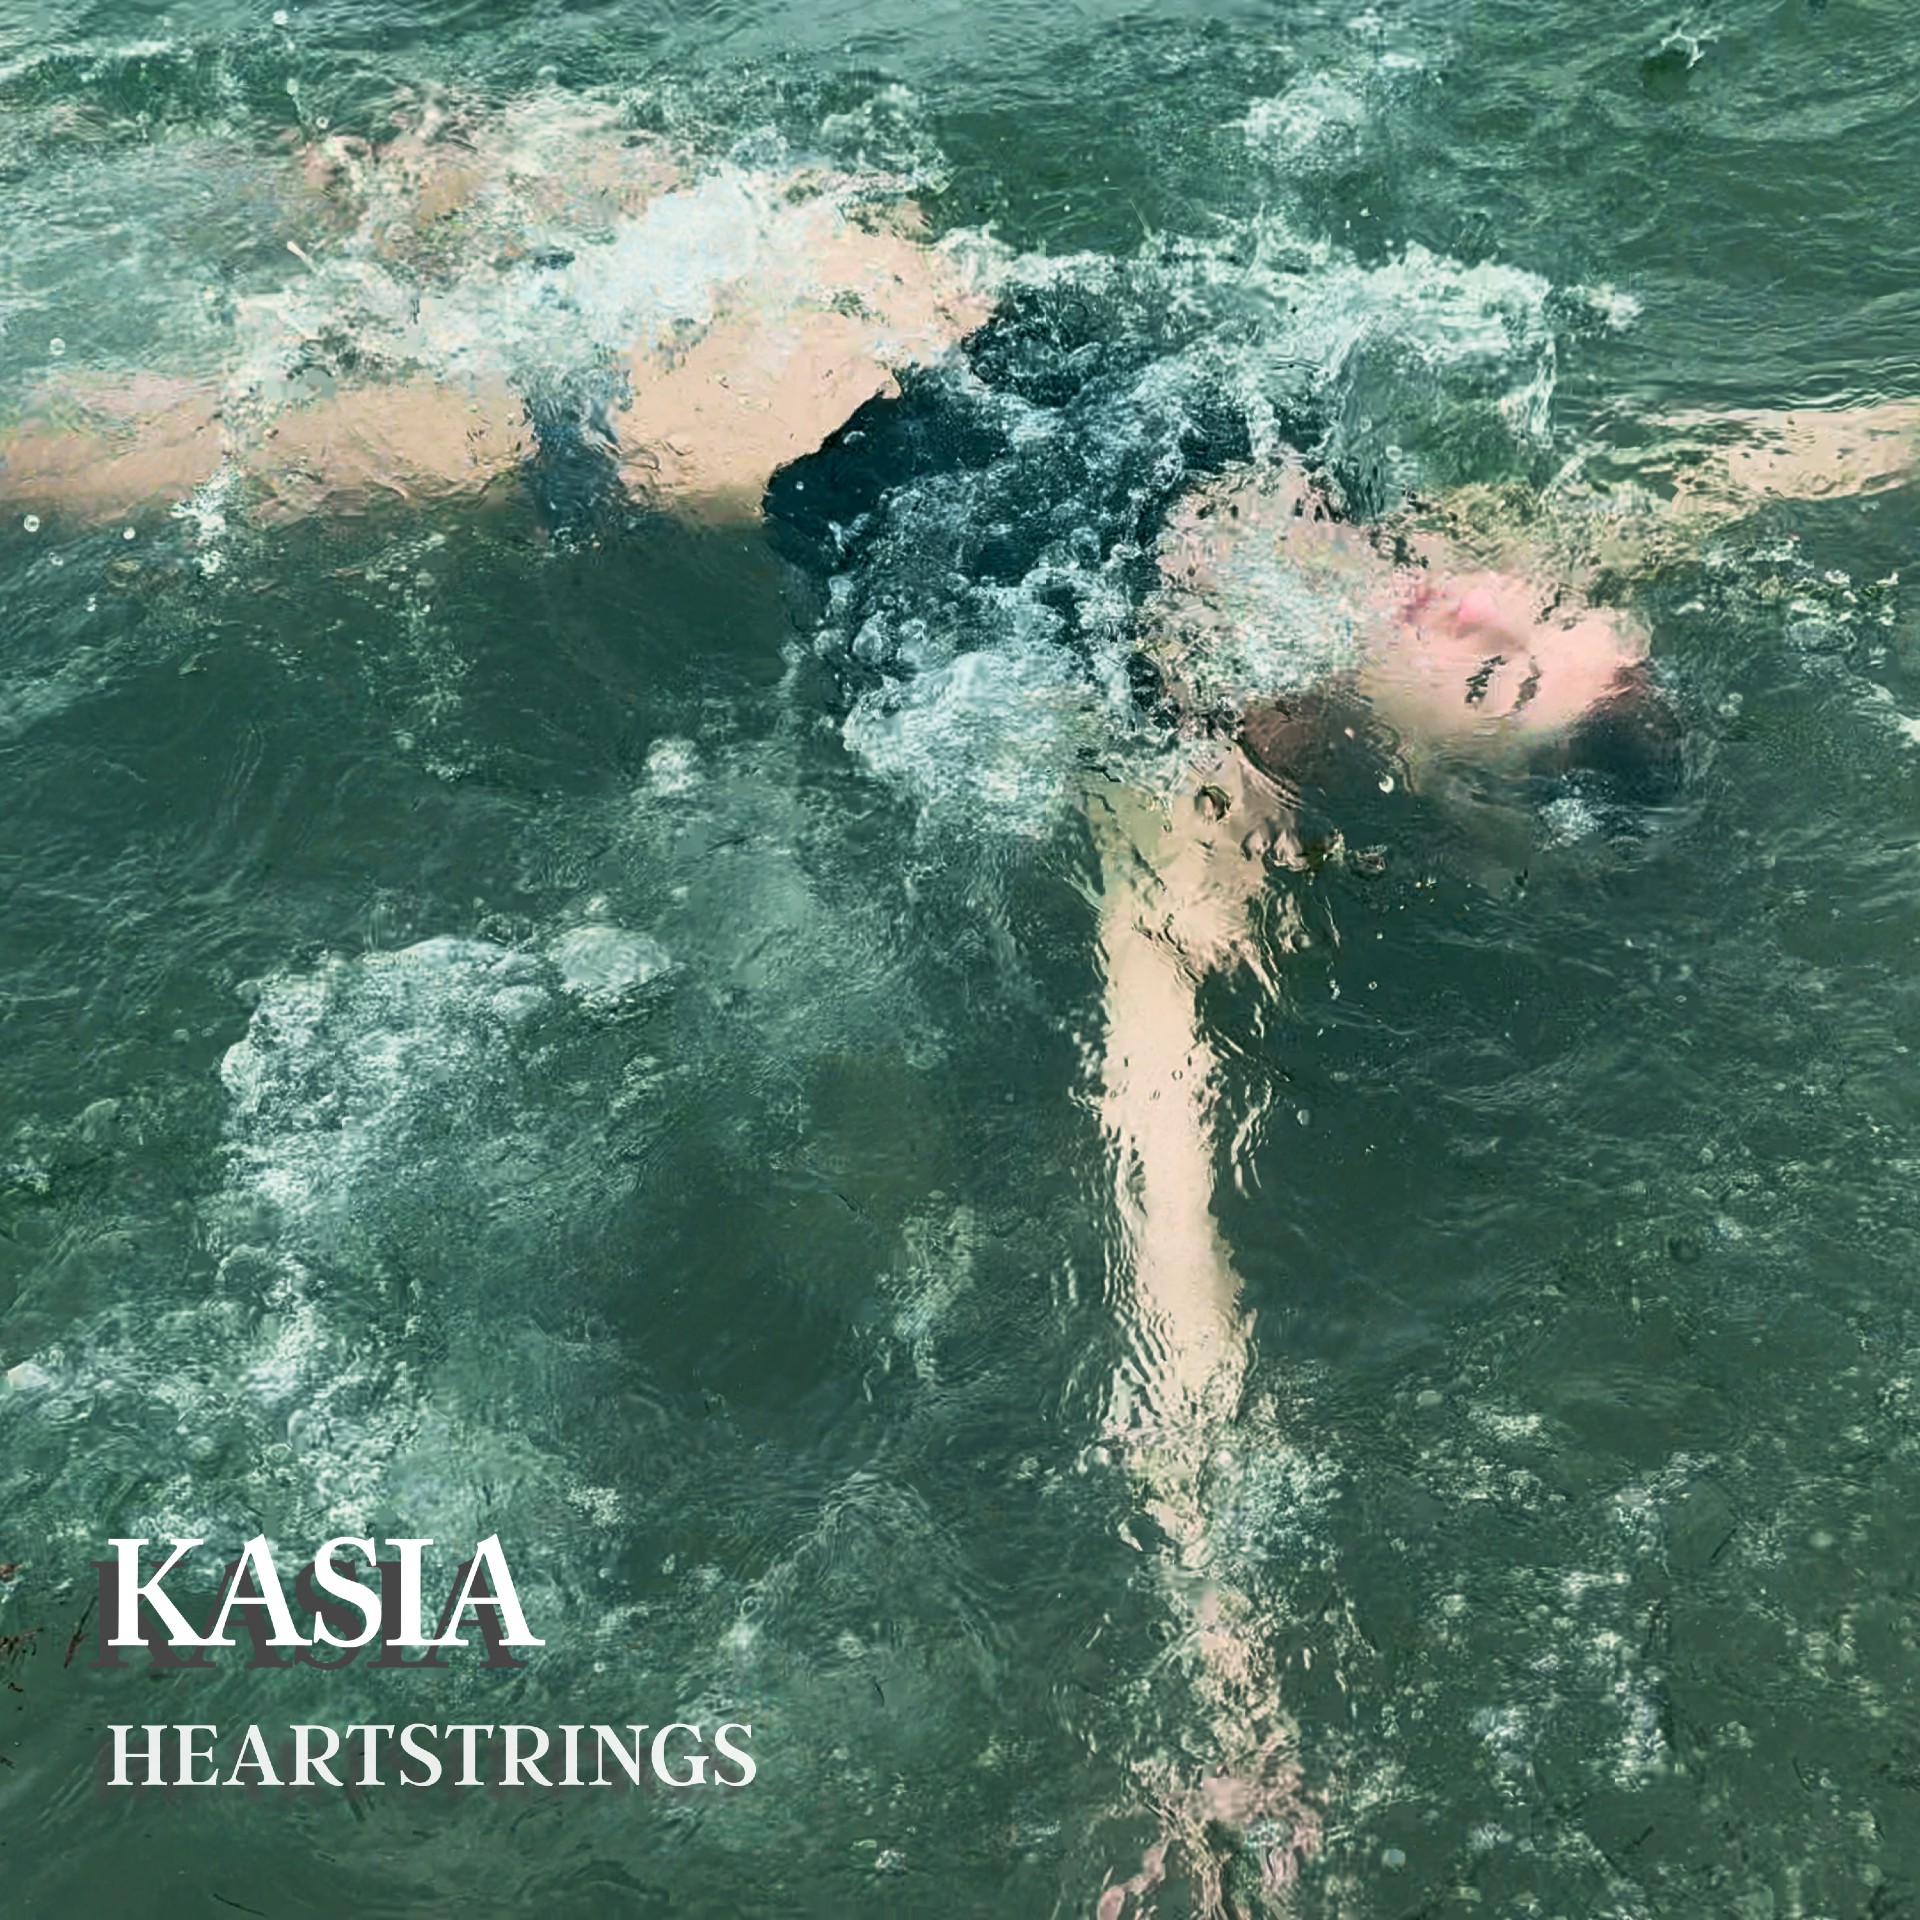 KASIA “Heartstrings” single artwork